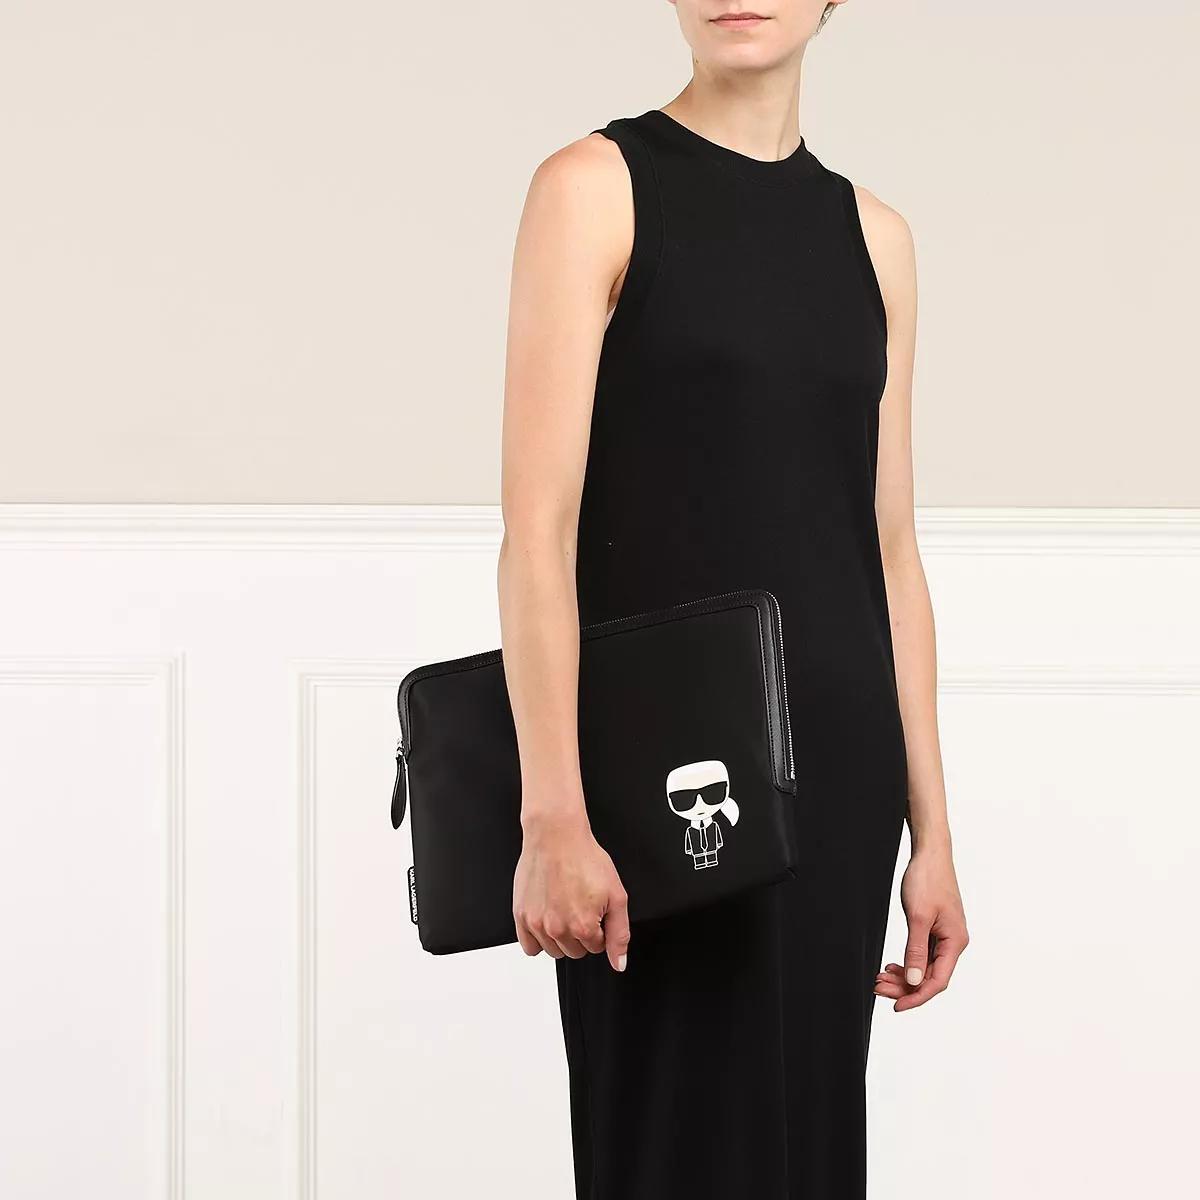 Karl Lagerfeld, K/Skuare Laptop Sleeve, Man, Black, Size: One Size